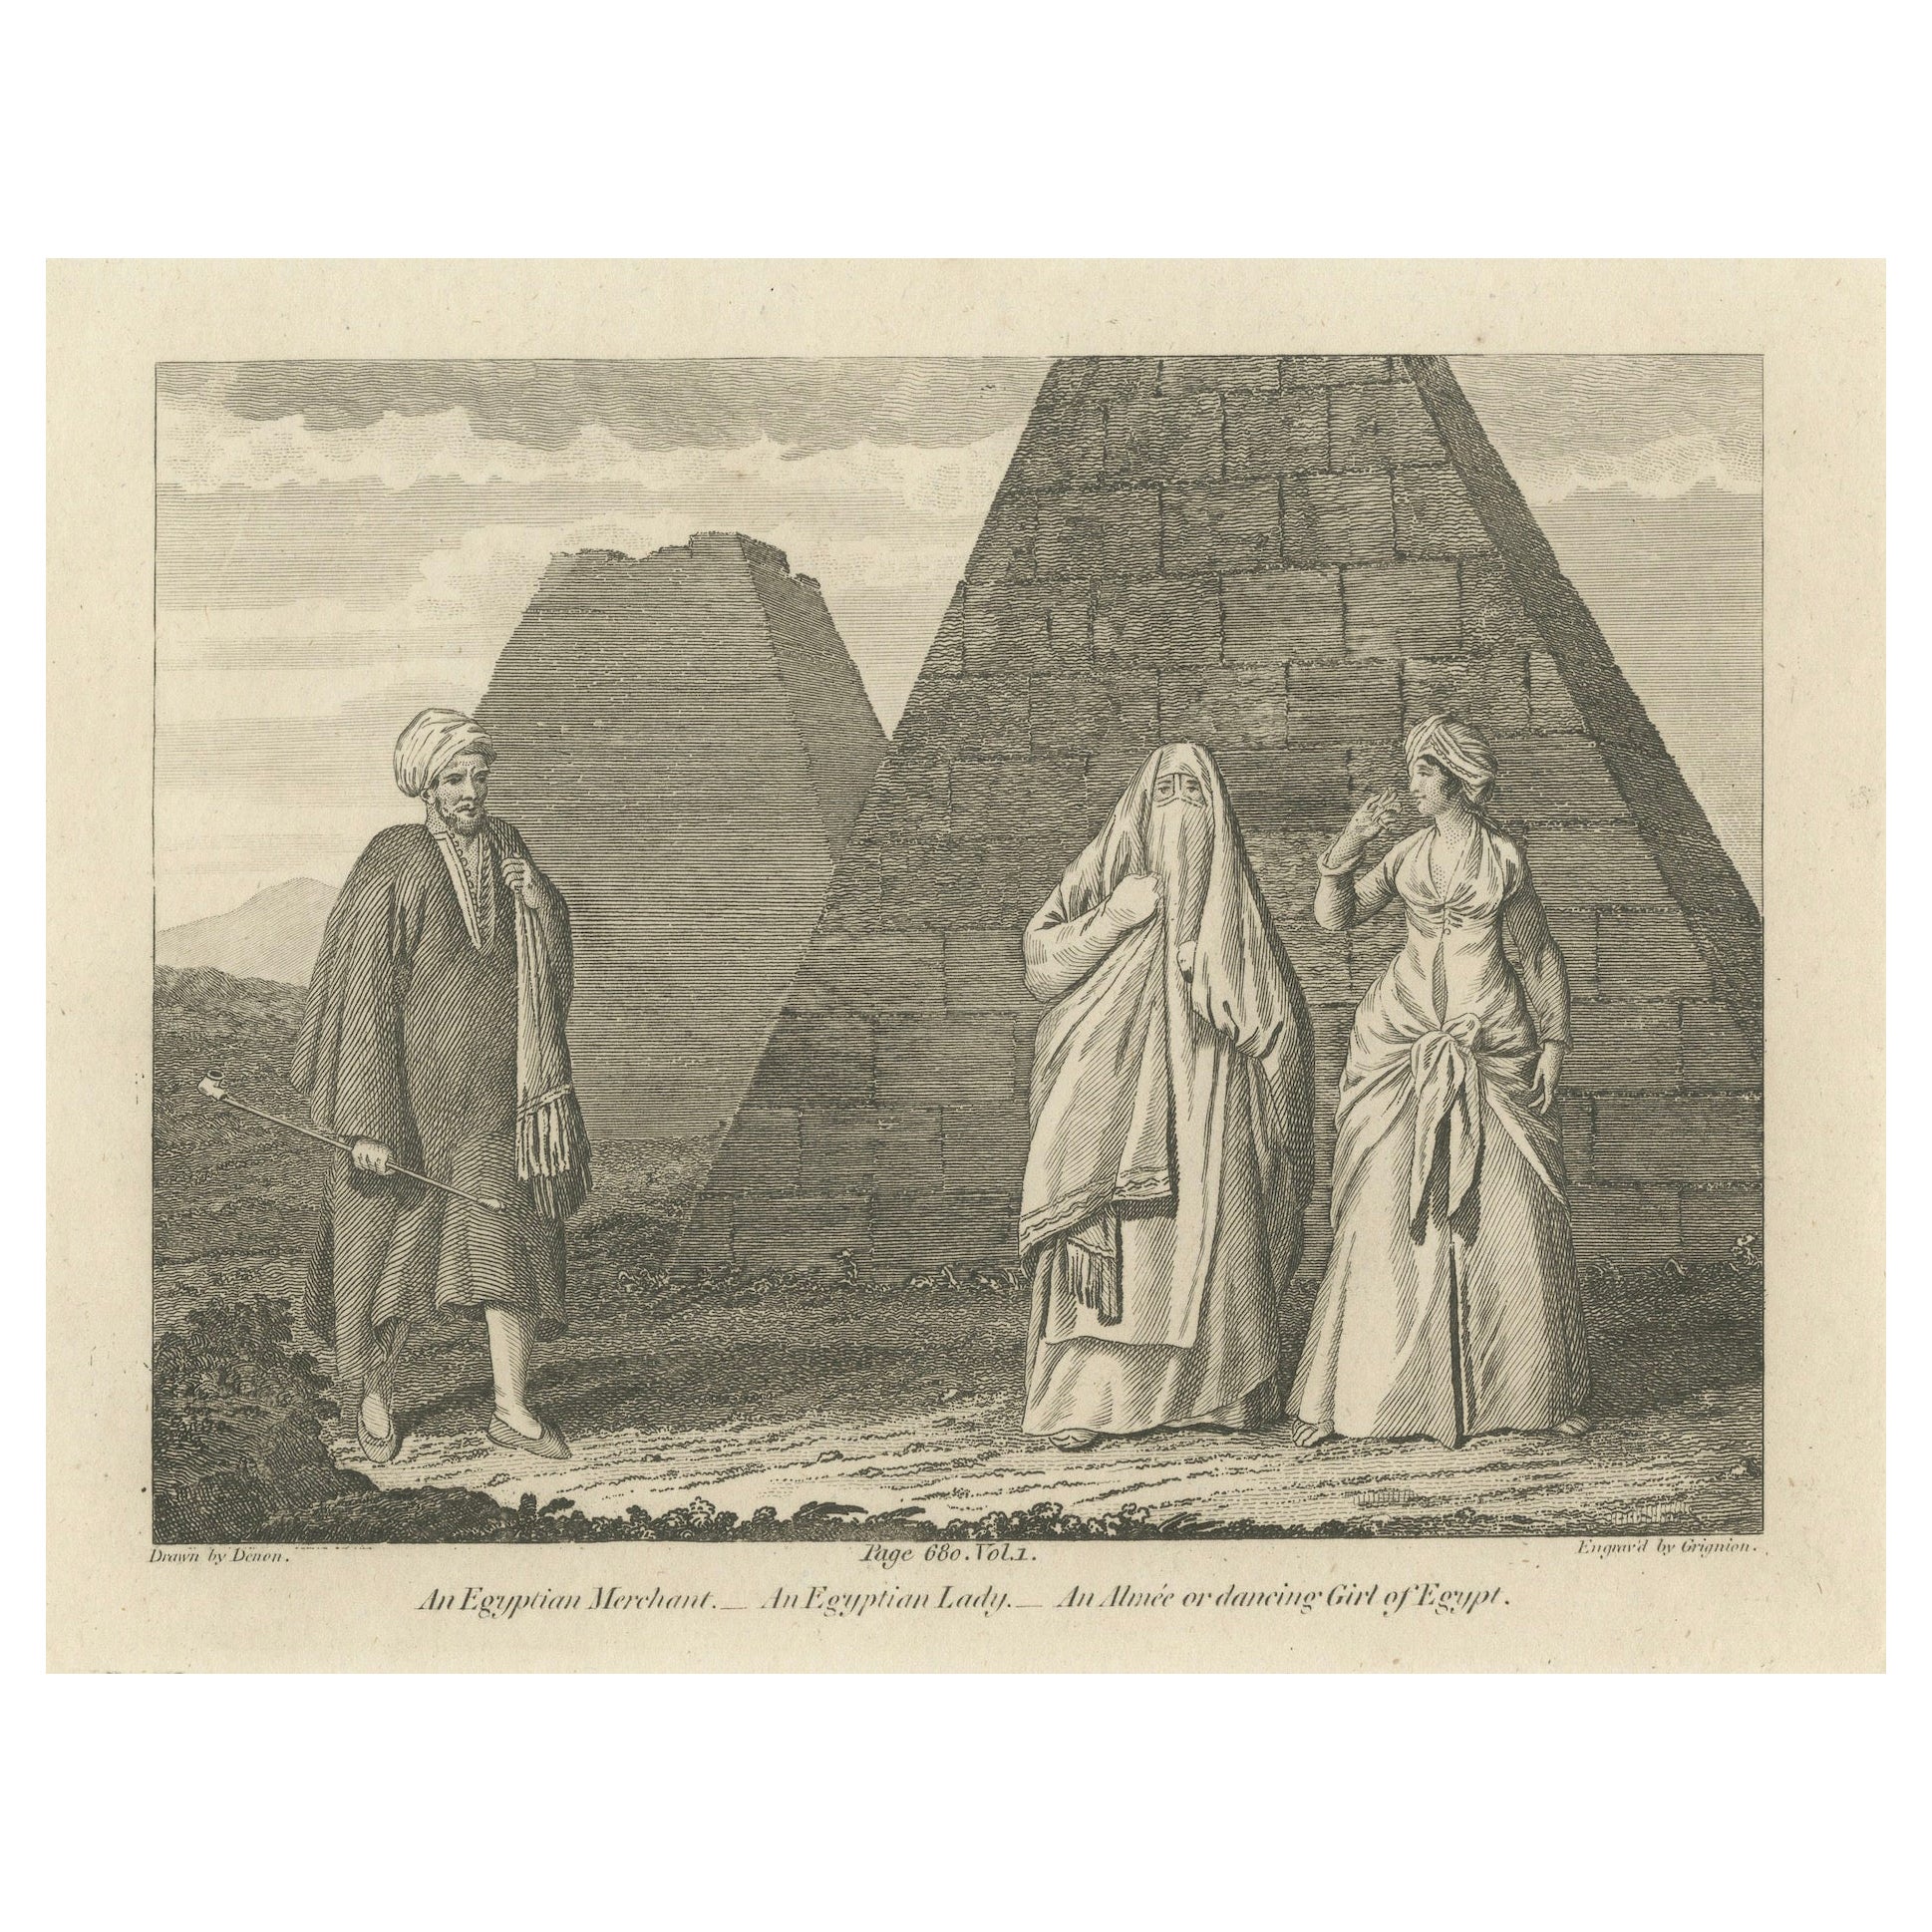 Society of the Nile: Mamluk, Lady und Almee in Ägypten, 1801